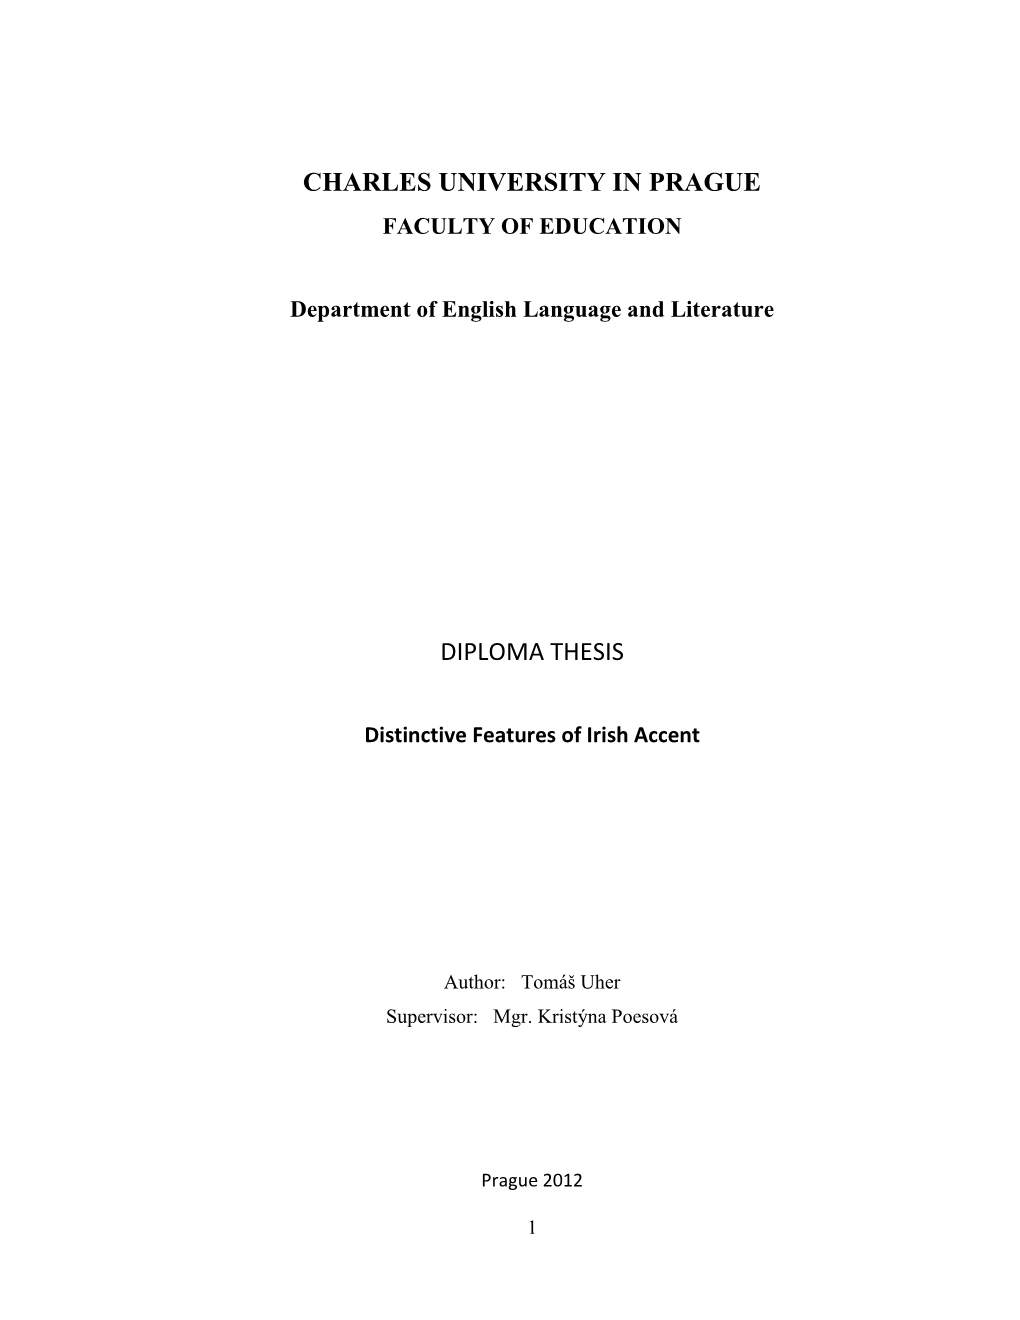 Charles University in Prague Diploma Thesis